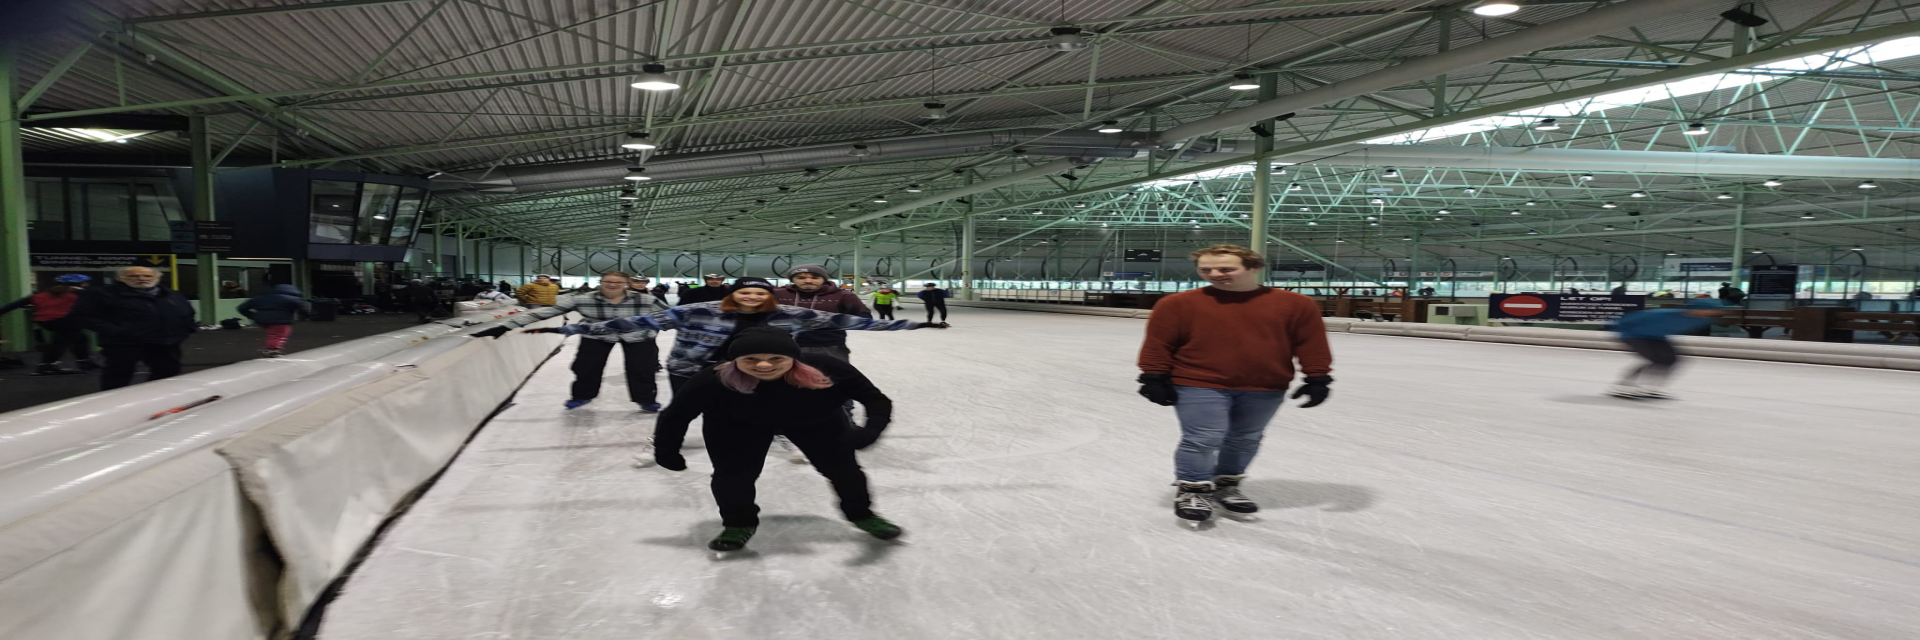 Ice skating + committee activities